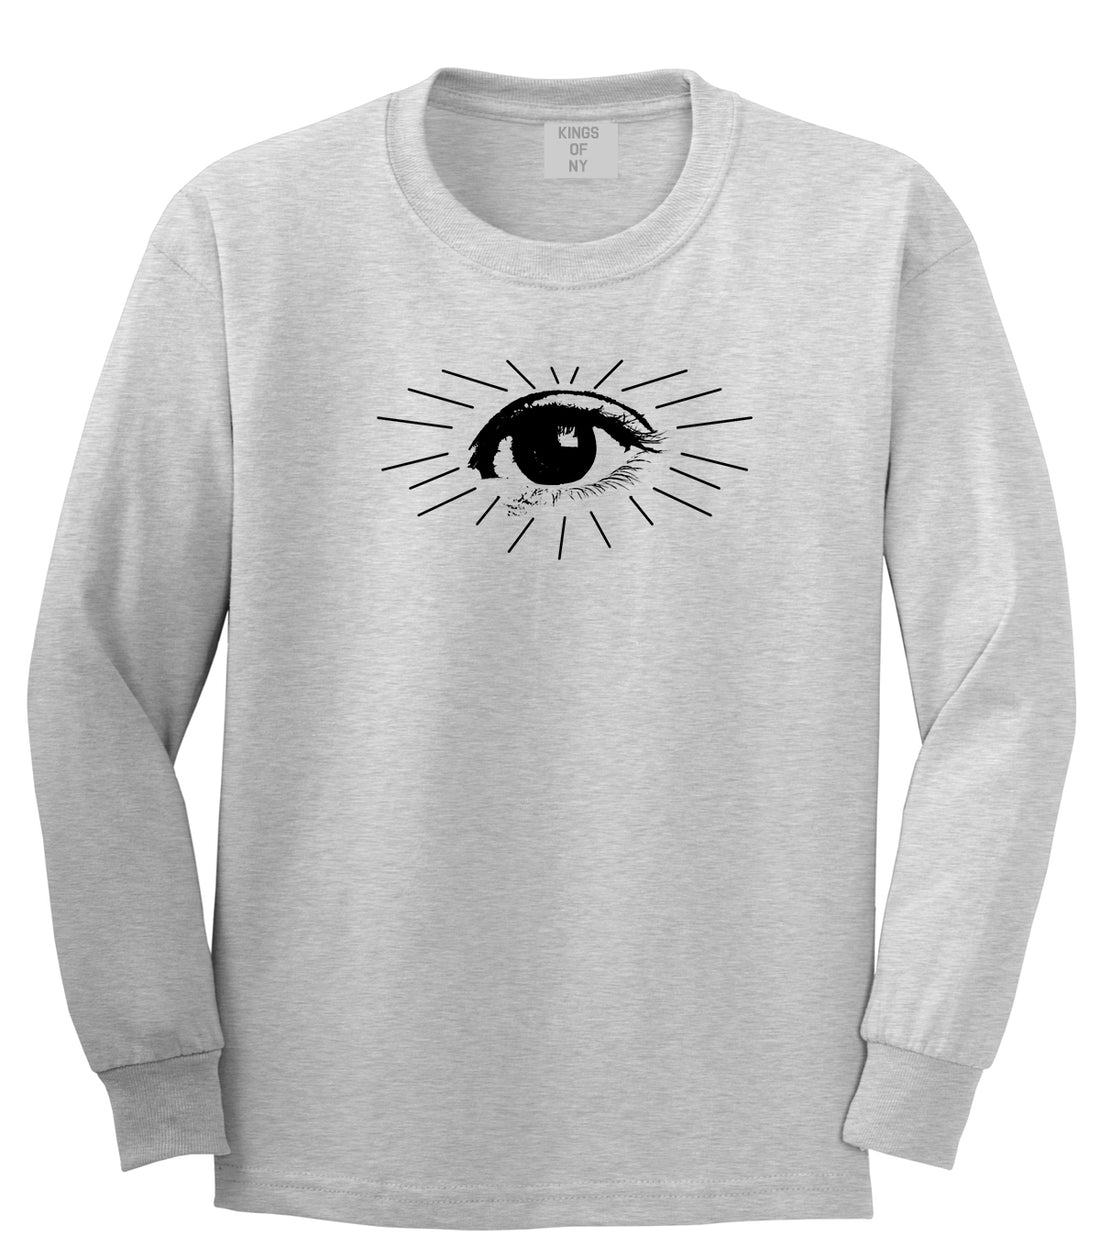 Eyeball Eyes Print Mens Grey Long Sleeve T-Shirt by KINGS OF NY